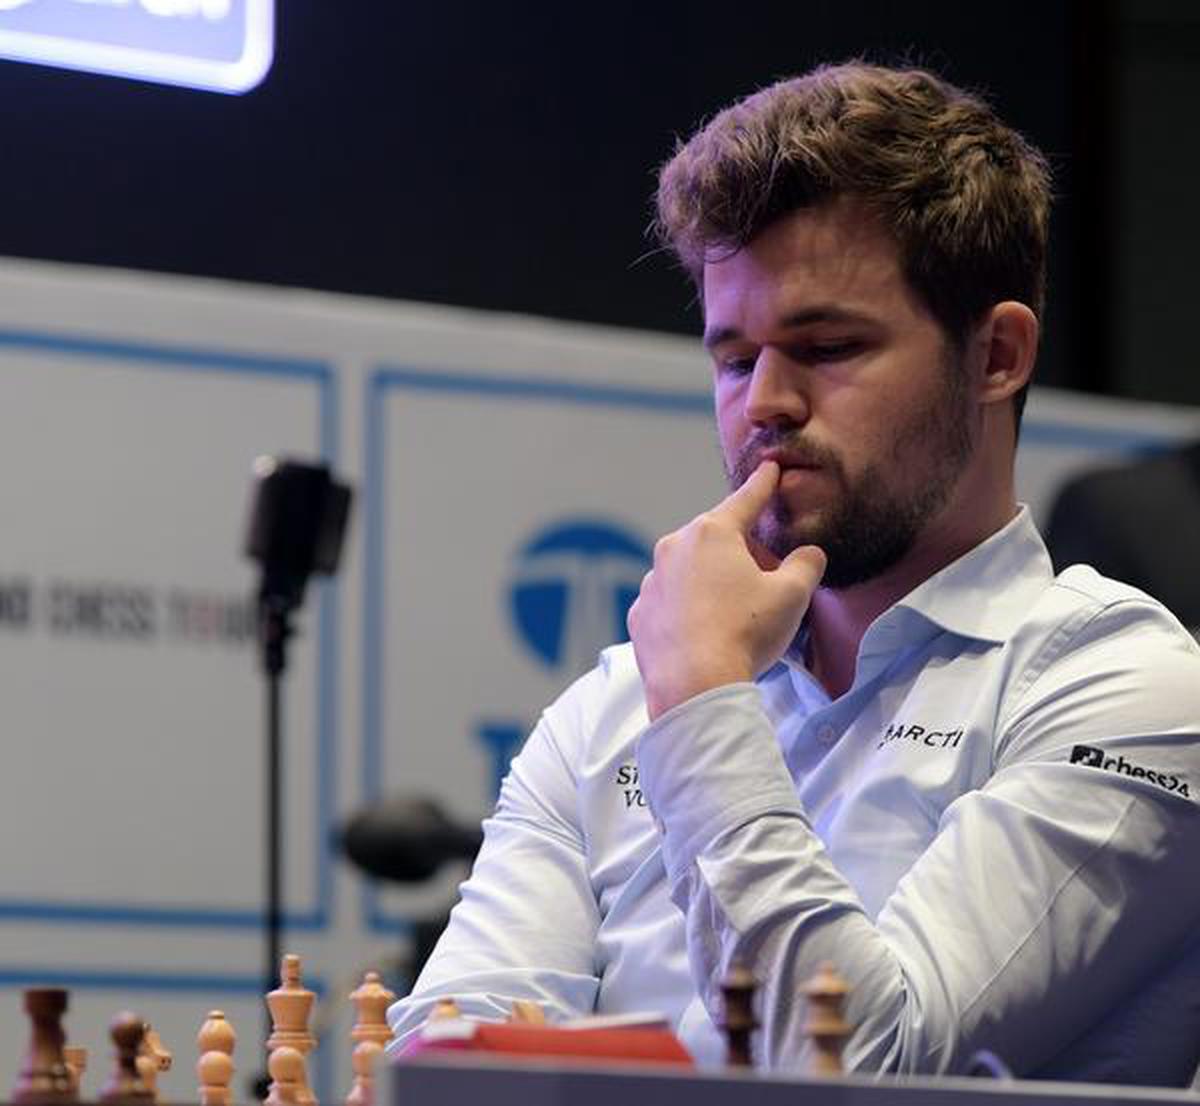 Opera Euro Rapid Chess: Carlsen, So take lead - Sportstar